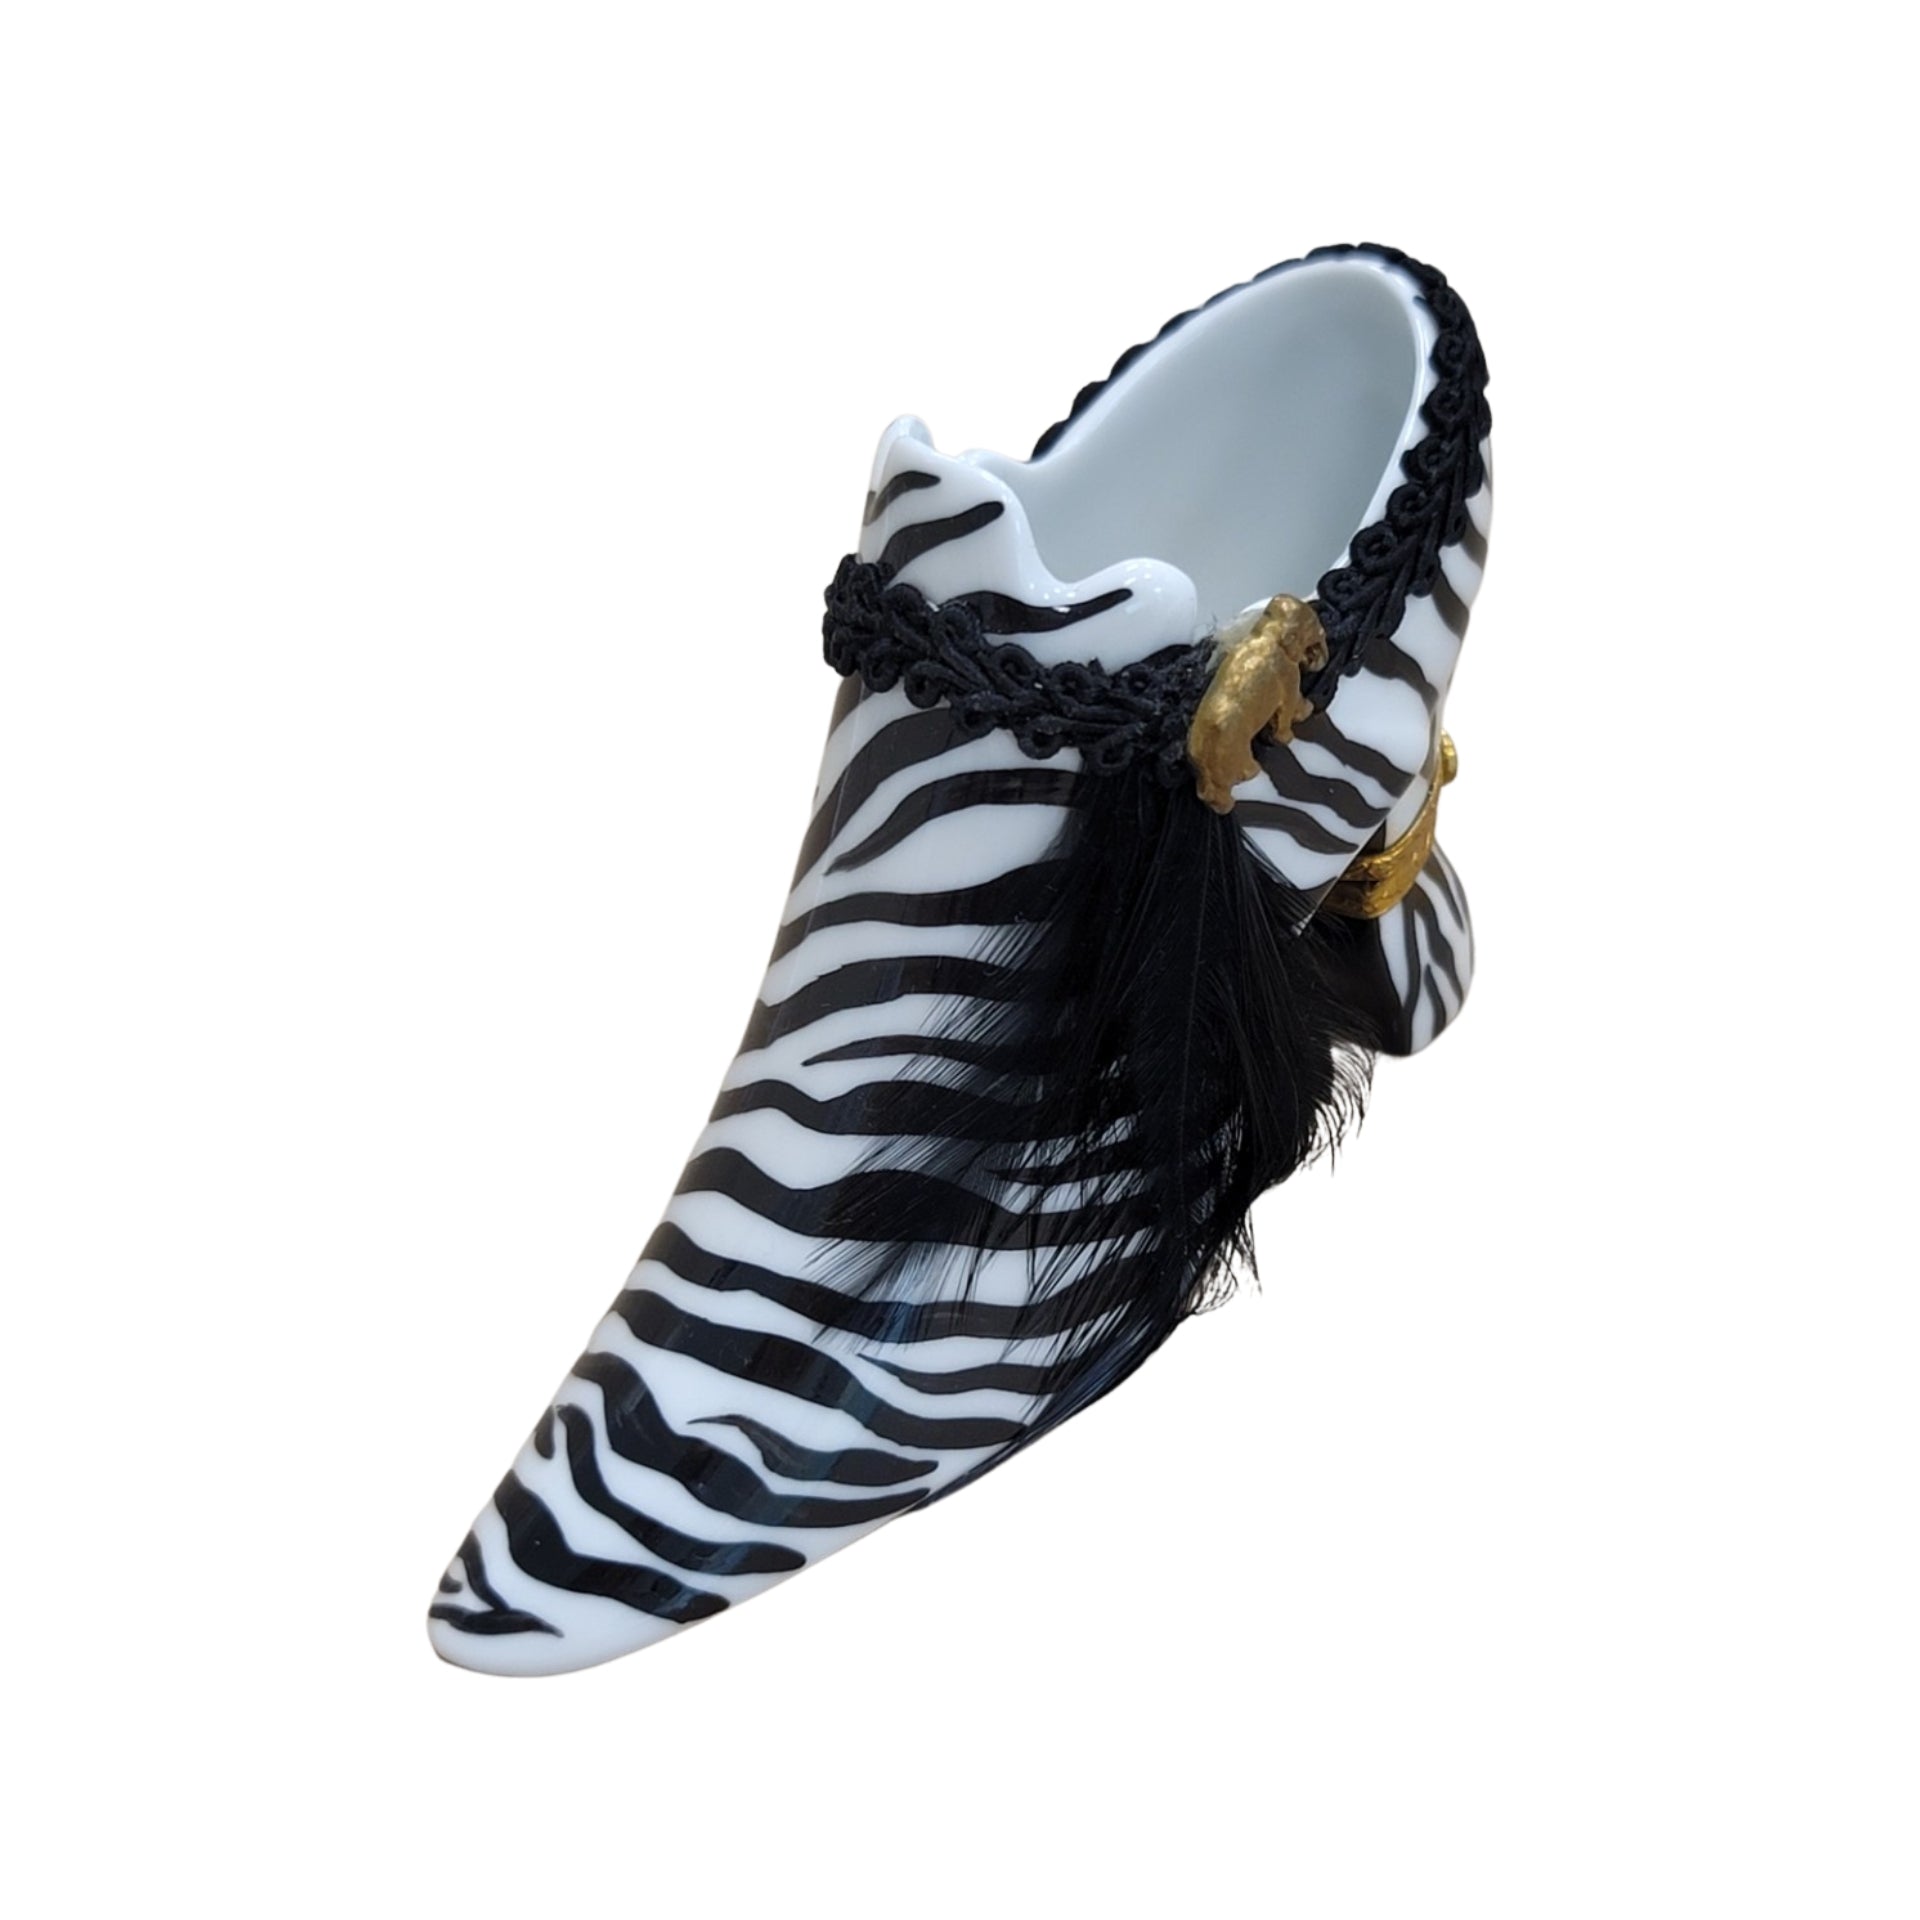 Zebra Shoe Fashion Porcelain Limoges Trinket Box